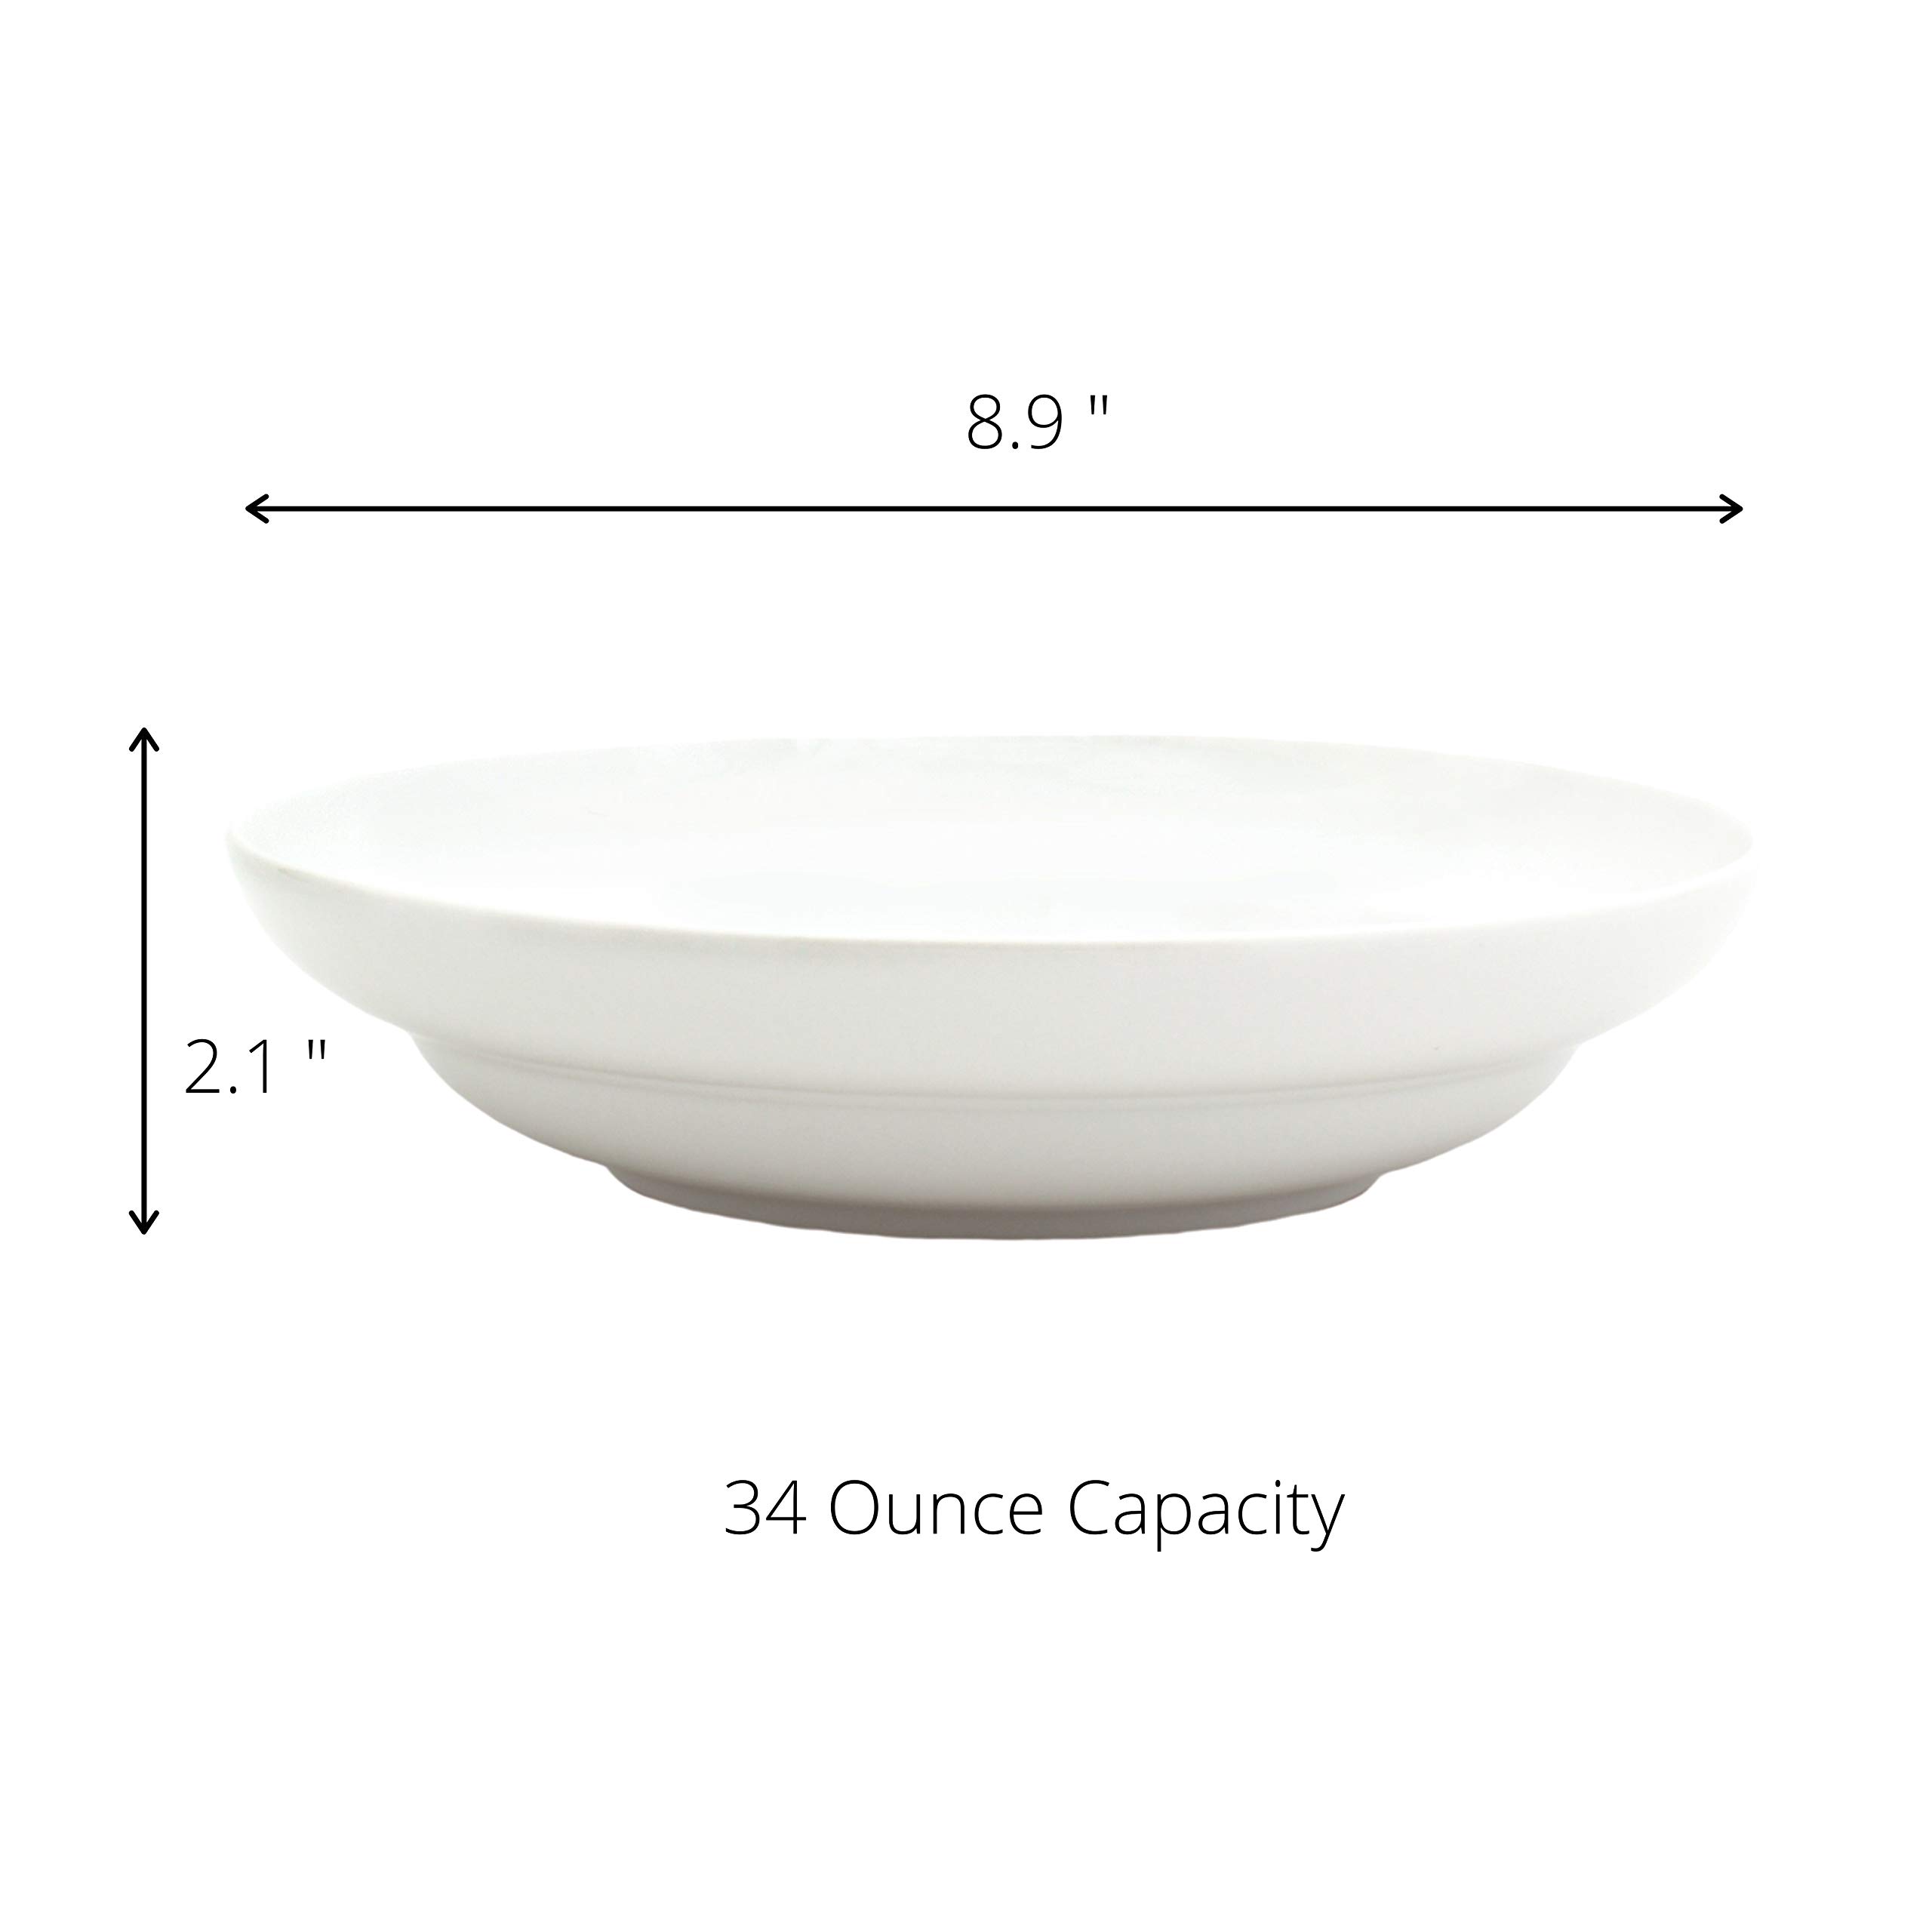 Euro Ceramica White Essential Porcelain Collection, Pasta Bowls Set of 4, Inverted Rim Design, Classic